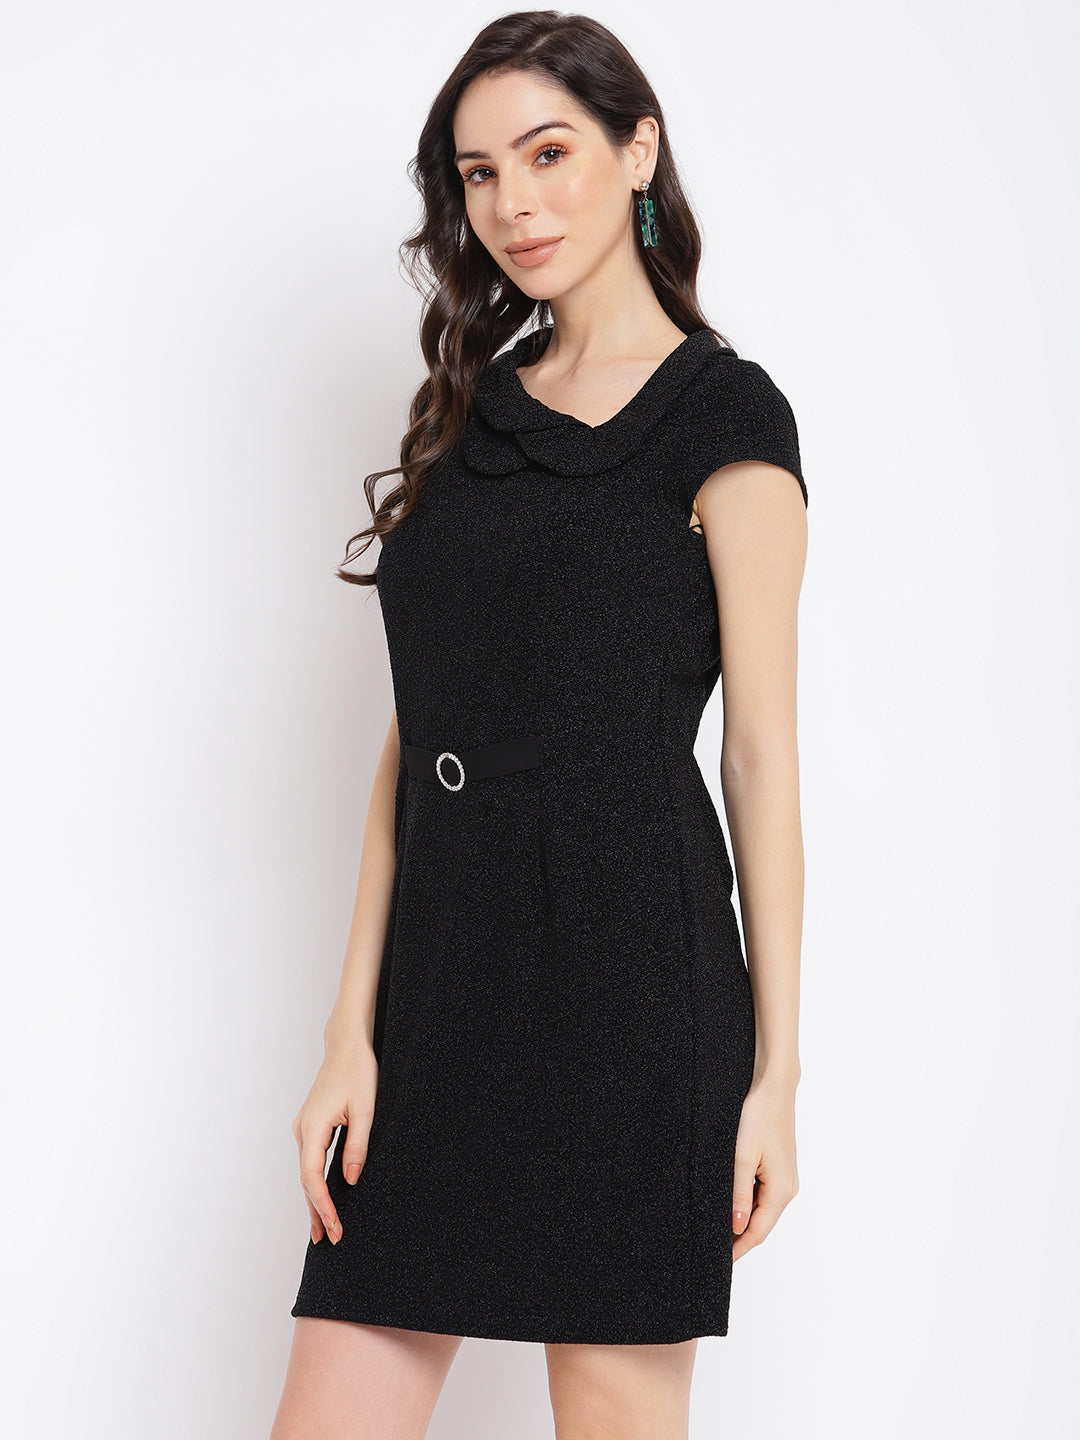 Black Solid Sleeveless A-Line Dress